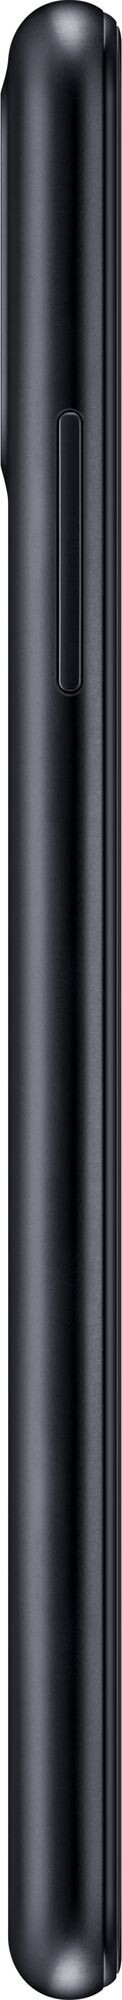 Смартфон Samsung Galaxy A01 2/16GB (SM-A015FZKDSEK) Black (lifecell) 2 - Фото 2